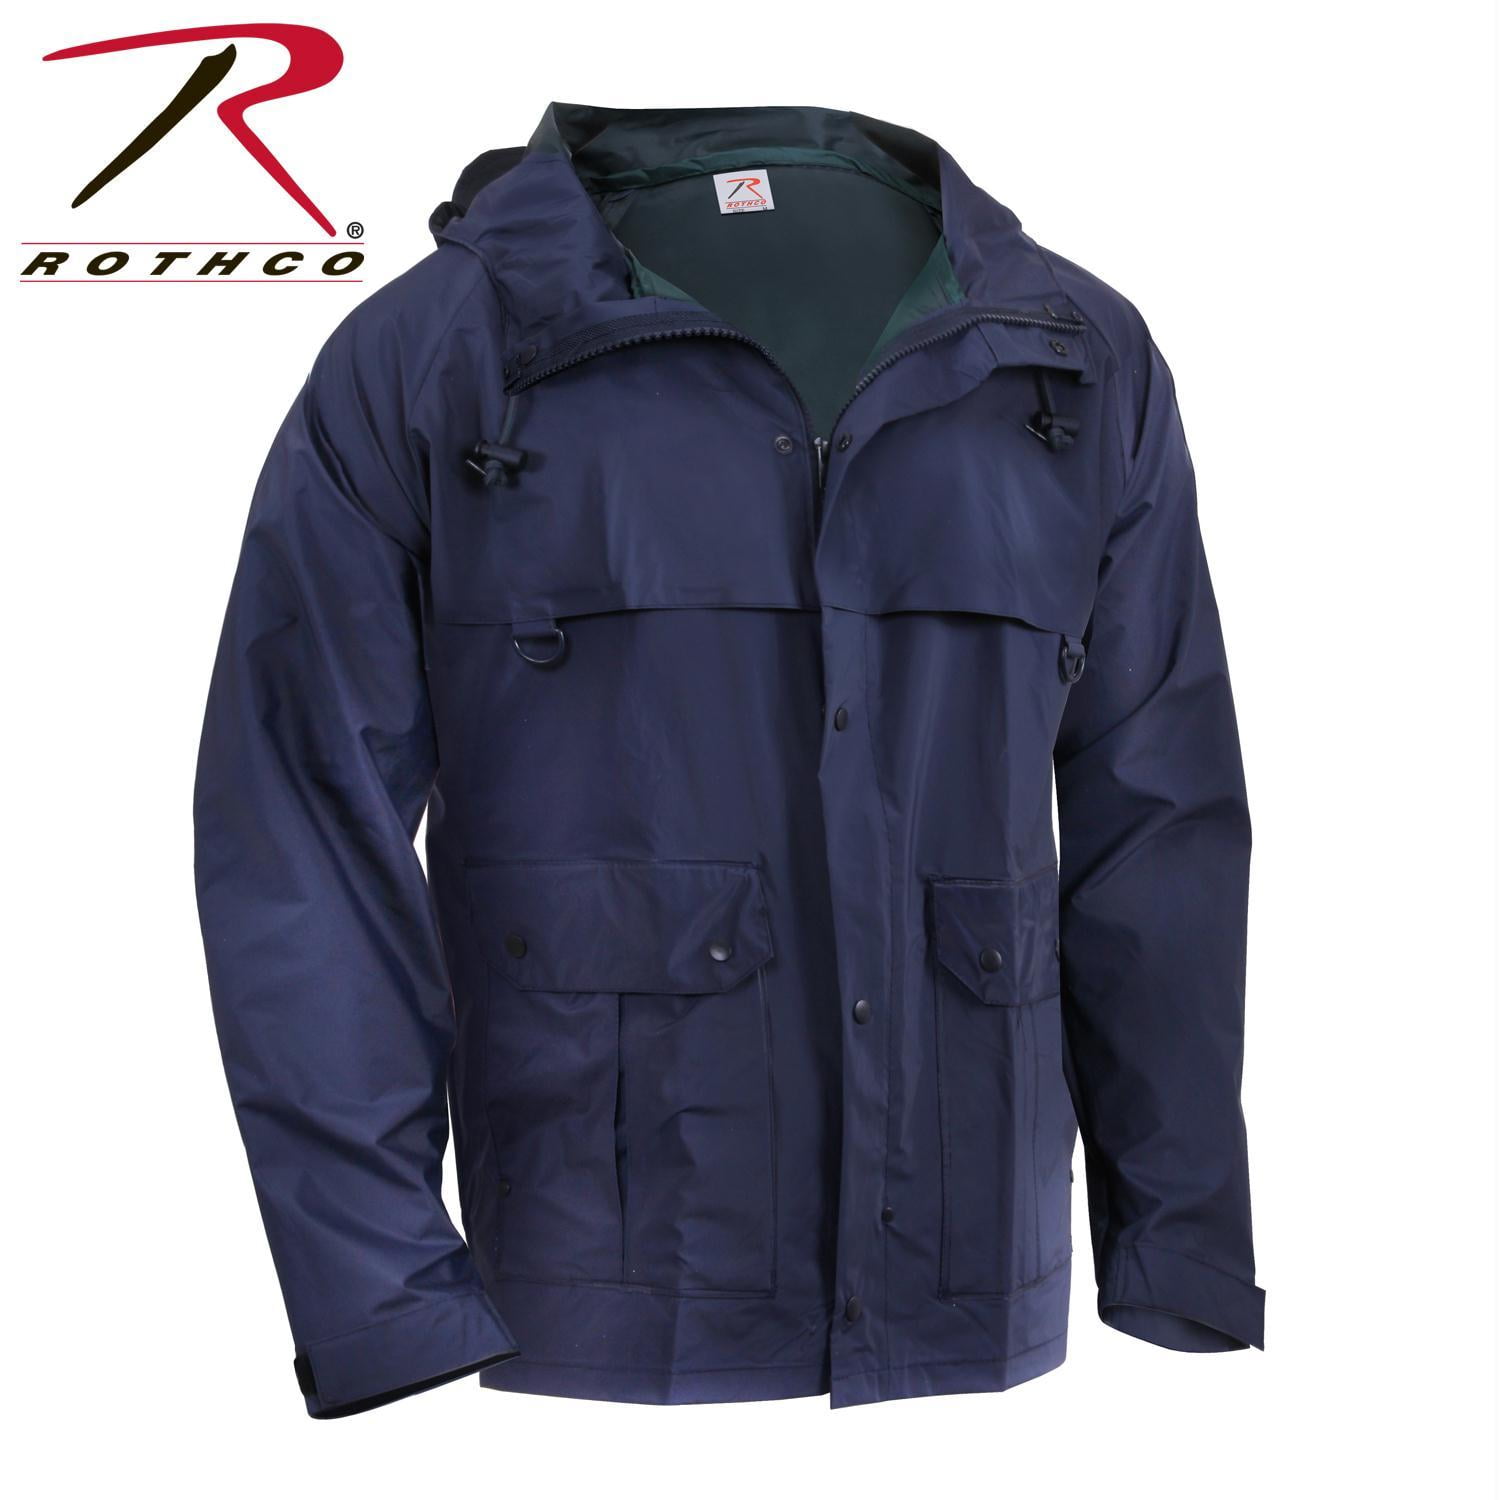 Rothco - rothco microlite rain jacket - navy blue - Walmart.com ...